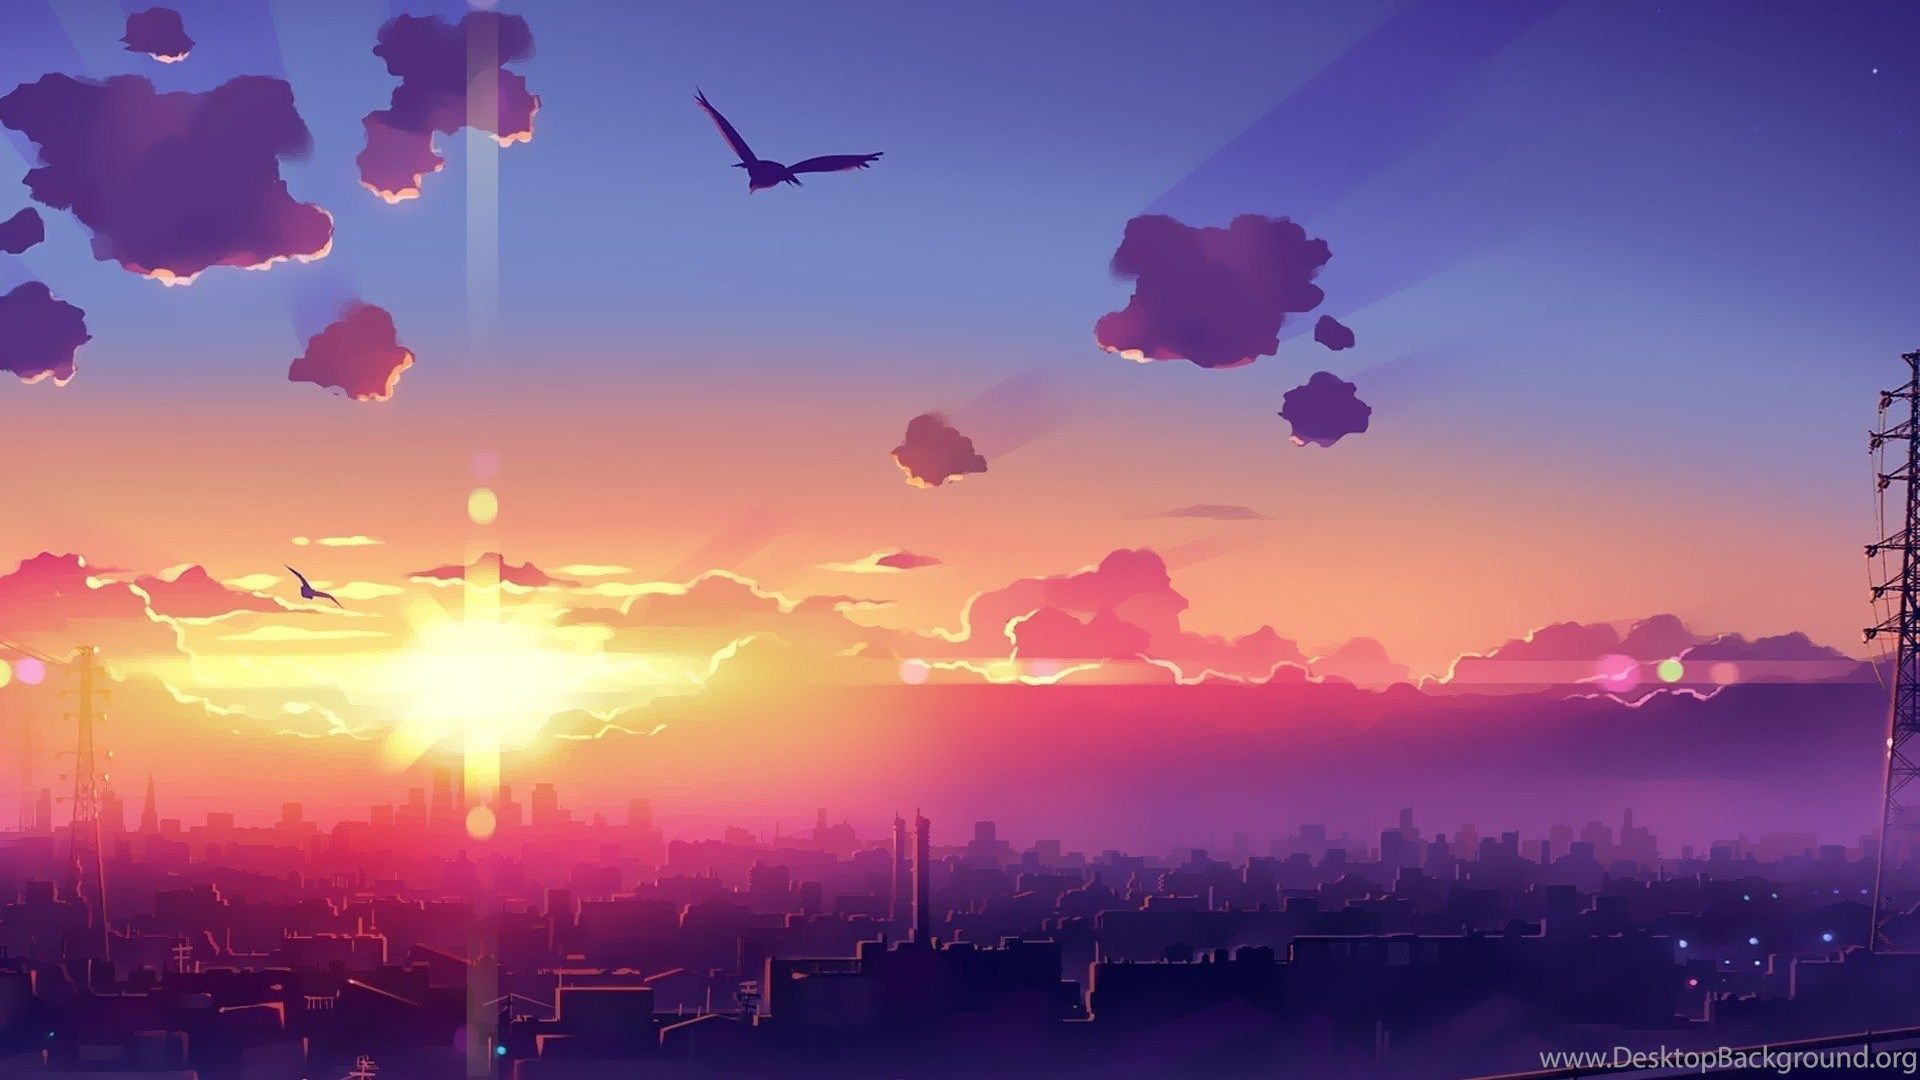 Download HD Artwork, Fantasy Art, Anime, City, Sunset, Sky